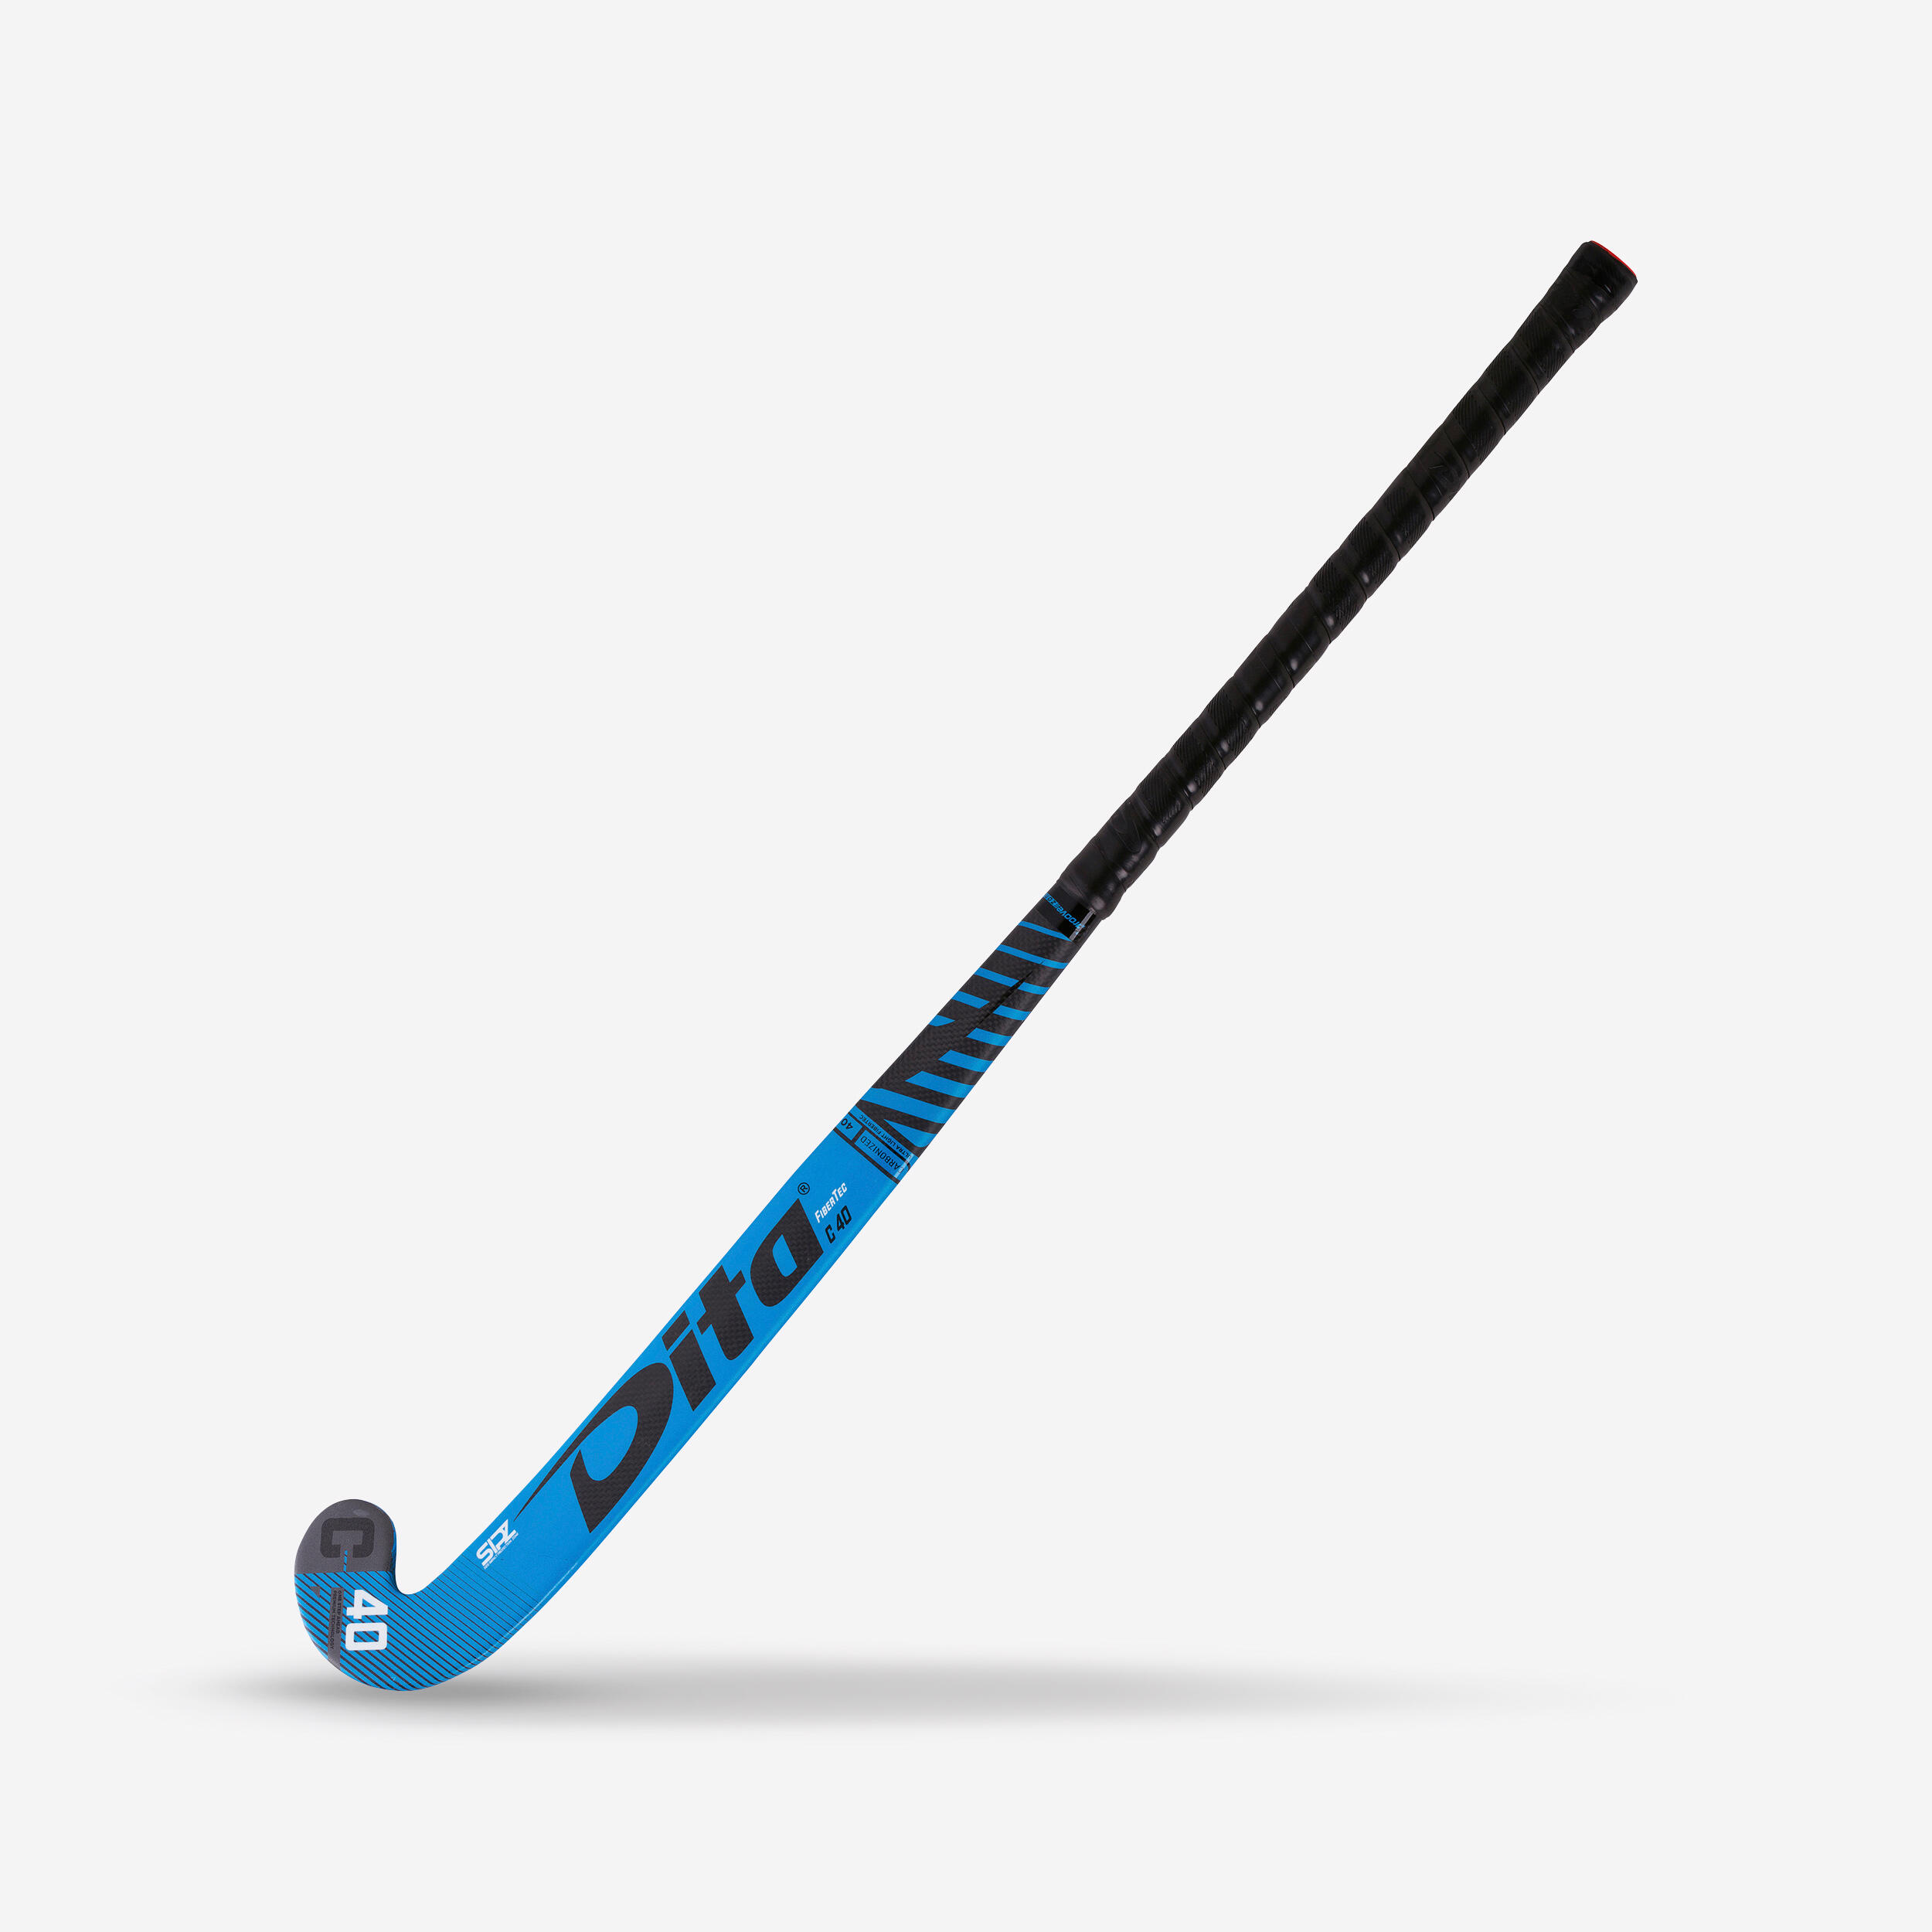 Intermediate 40% Carbon Mid Bow Field Hockey Stick FiberTecC40 - Blue 4/12